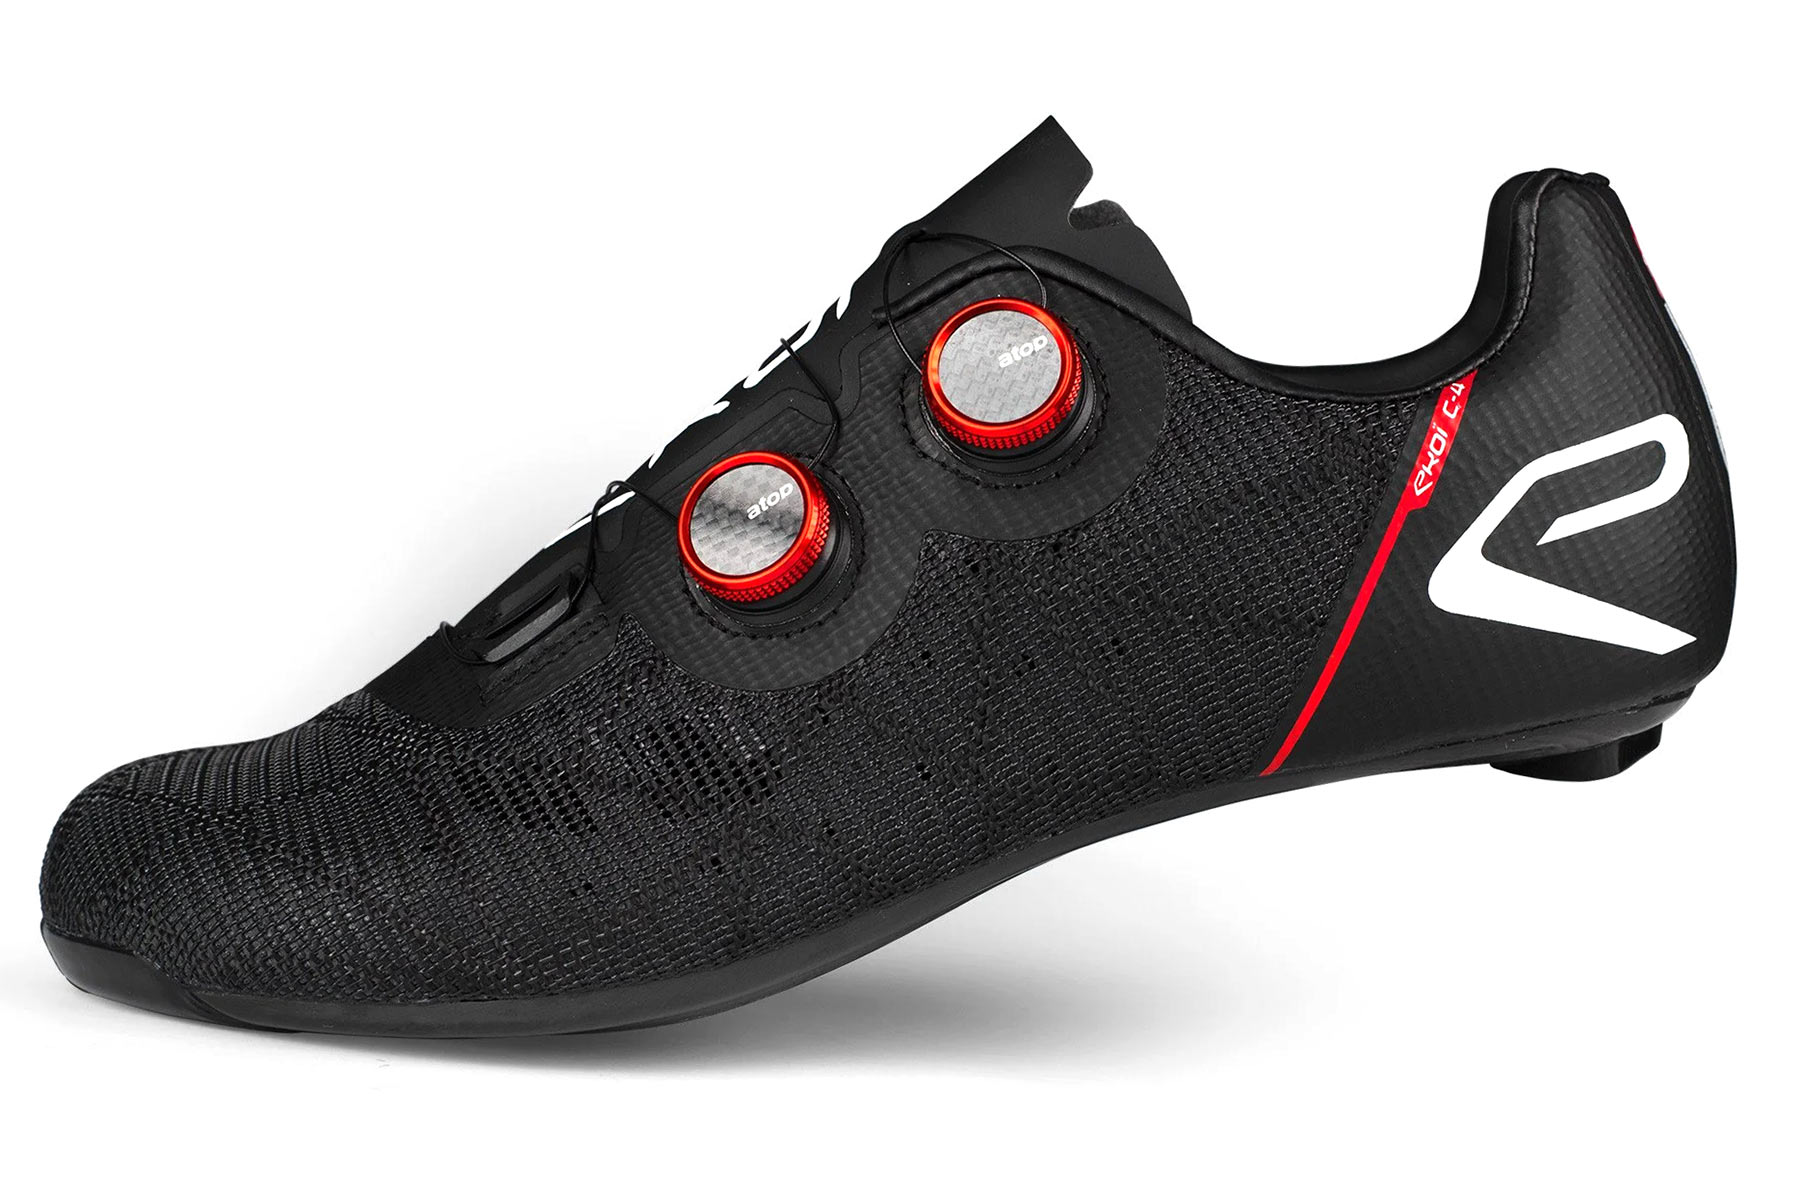 Ekoï C-4 carbon road bike shoes, affordable Ekoi full-carbon sole woven mesh vented cycling shoe, side